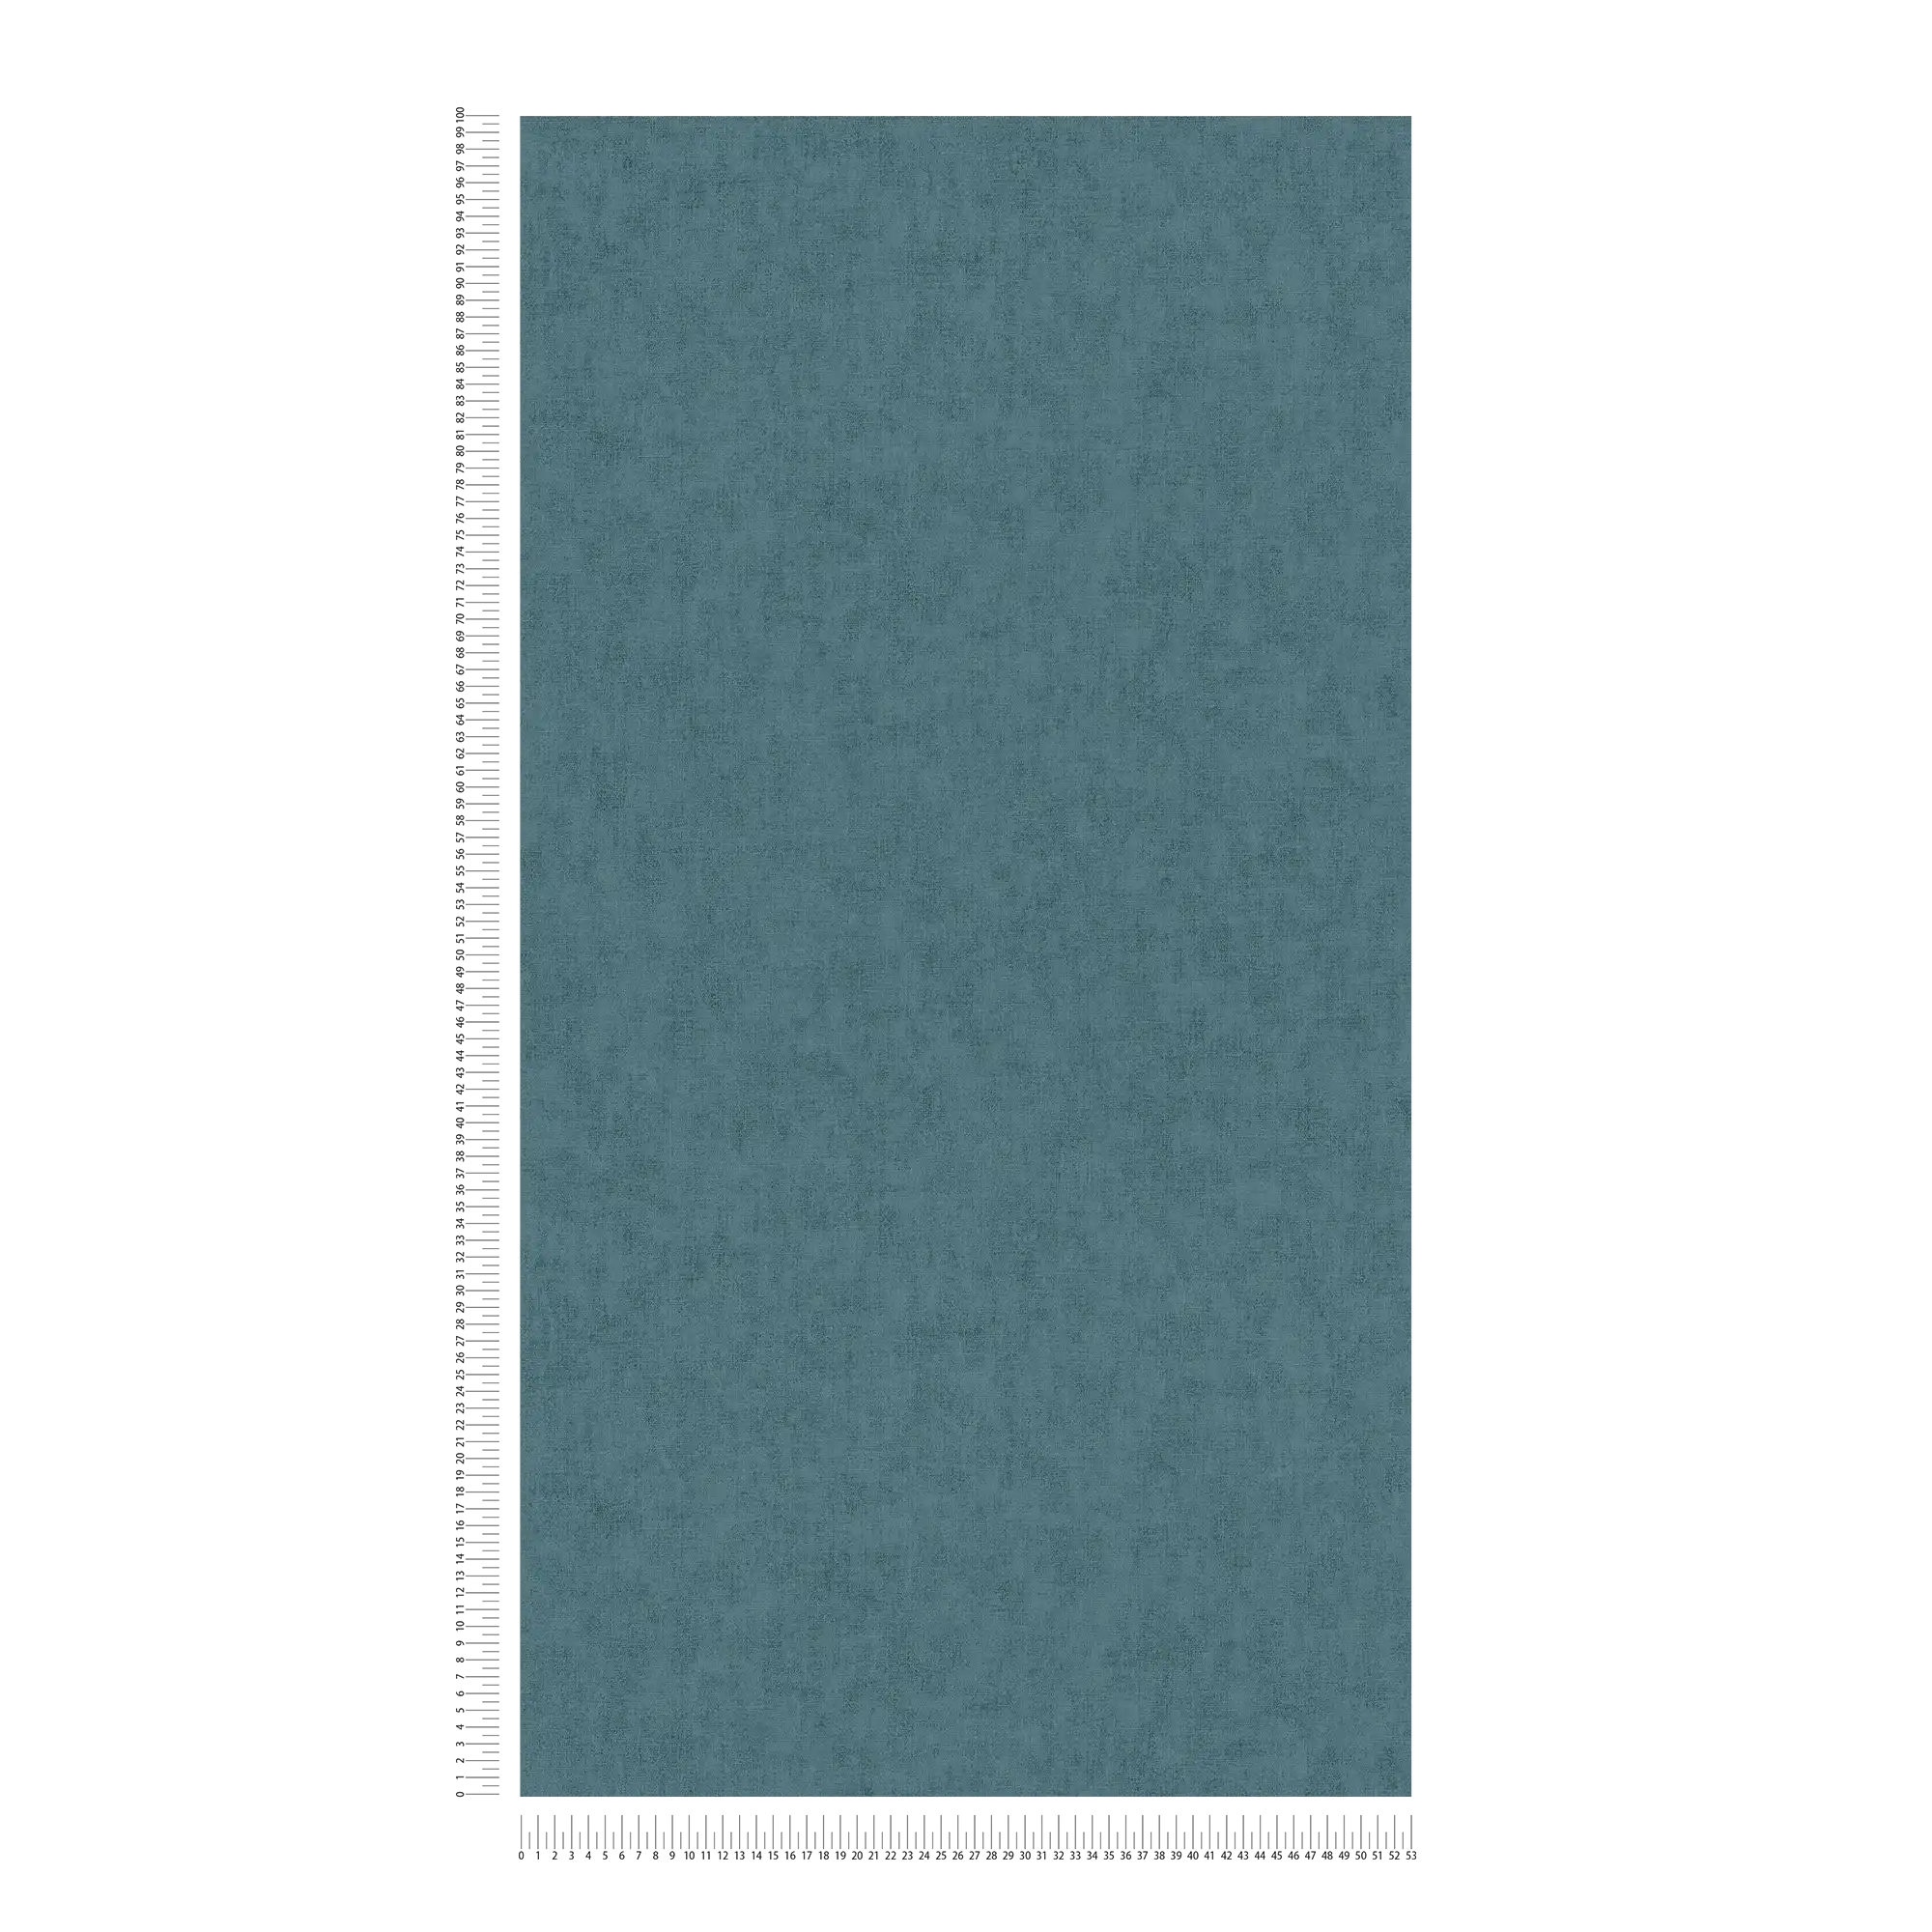             Papel pintado no tejido de estilo escandinavo con aspecto textil - azul, gris
        